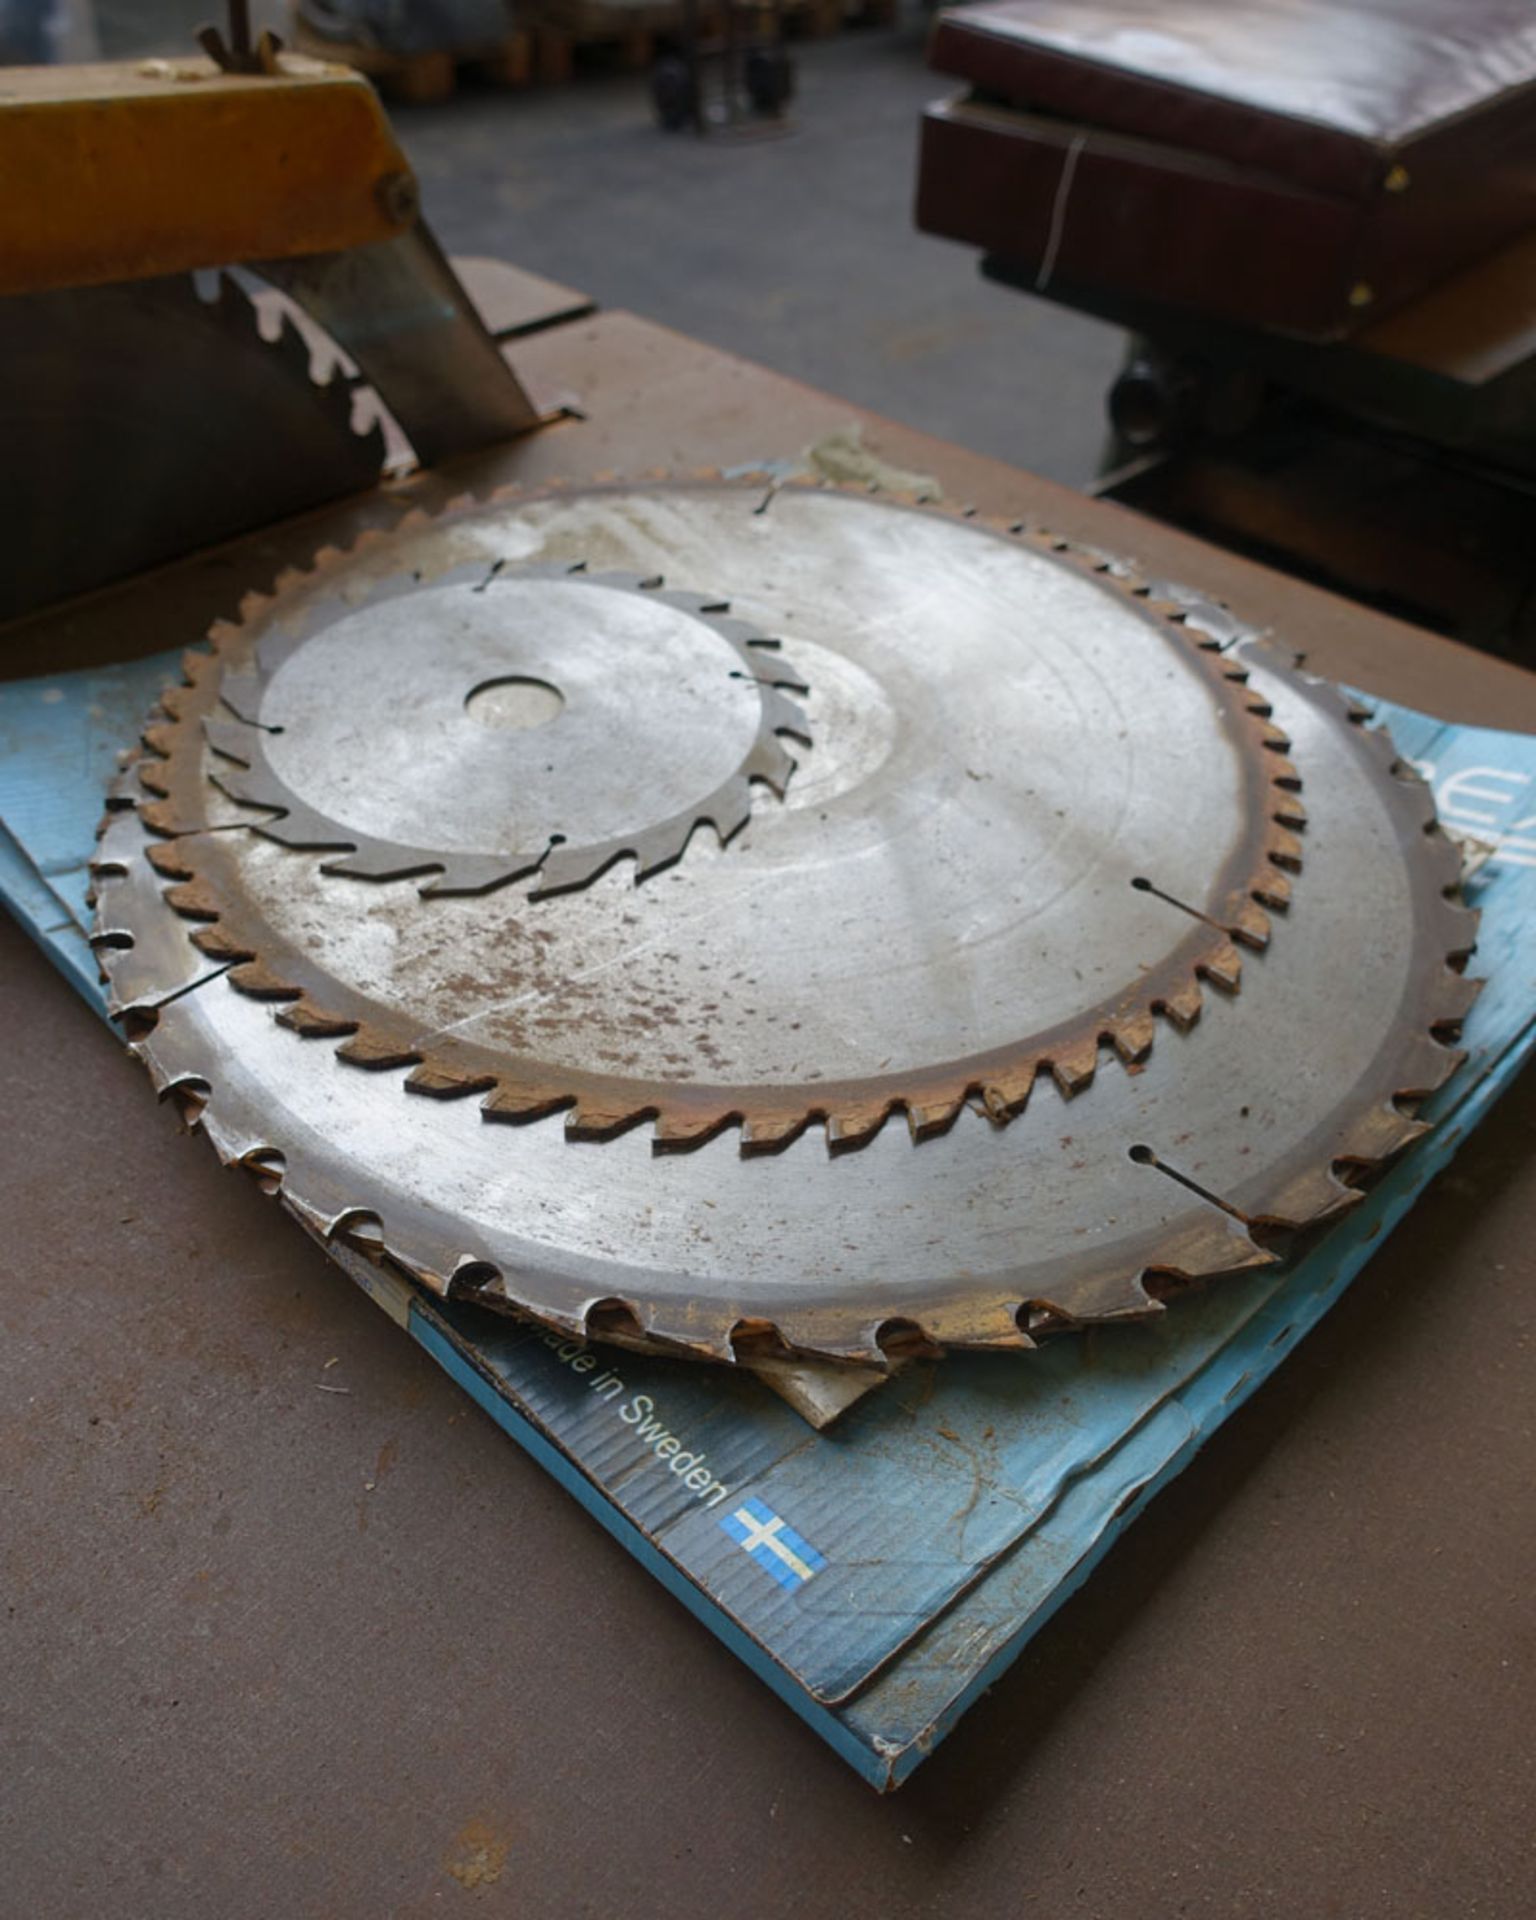 Sedgewick 250mm circular rip saw together with a range of circular saw blades - Image 3 of 3